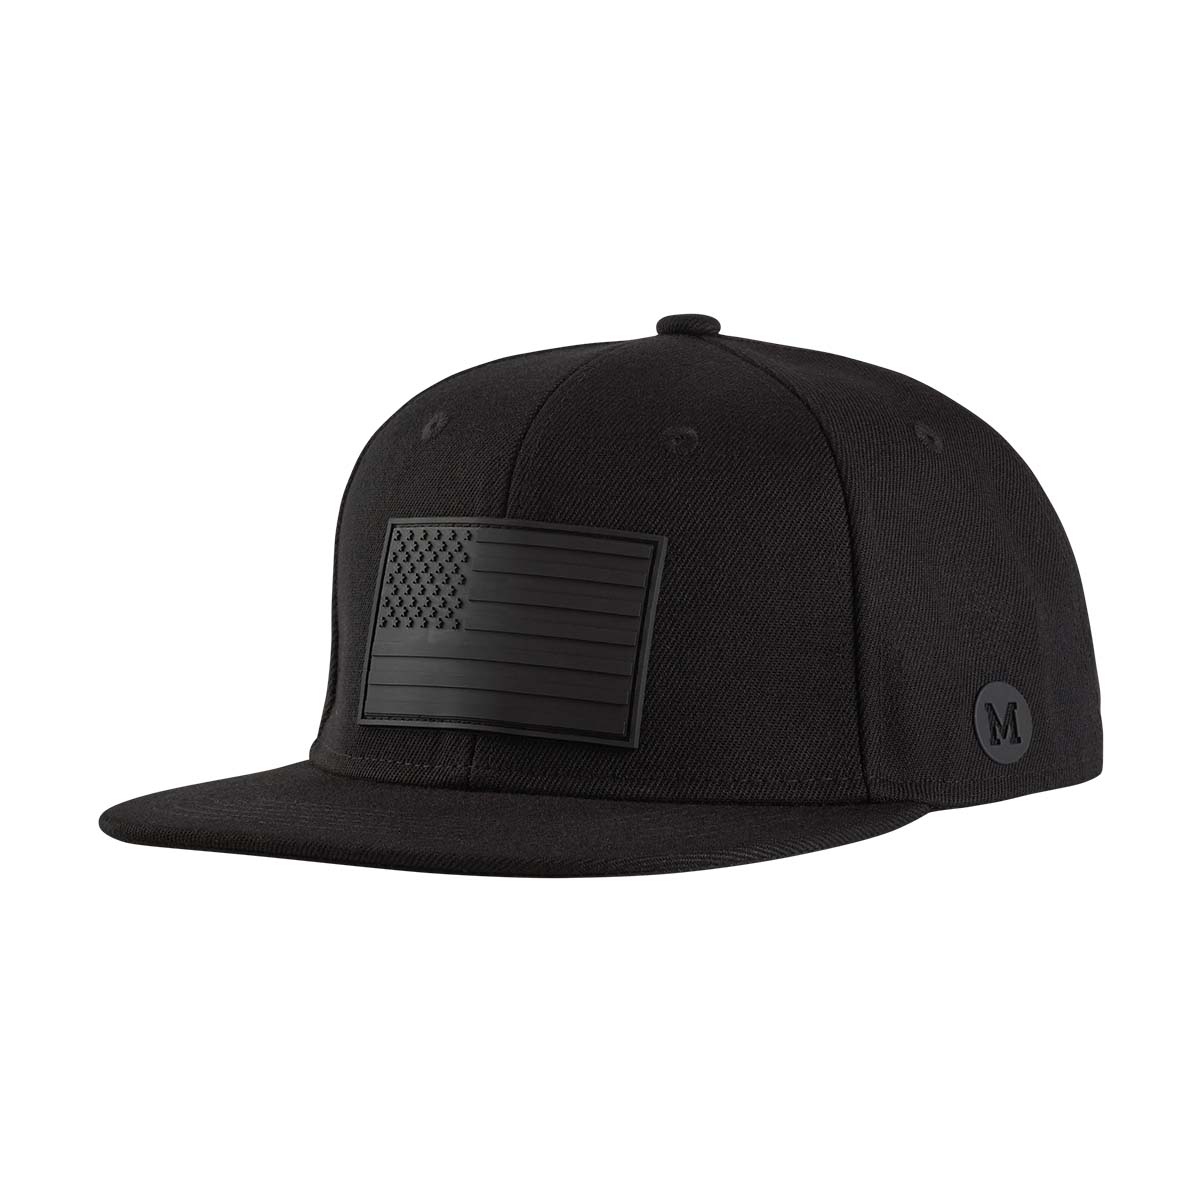 .com : SHIMANO Vintage Style Cap, Black, One Size : Sports